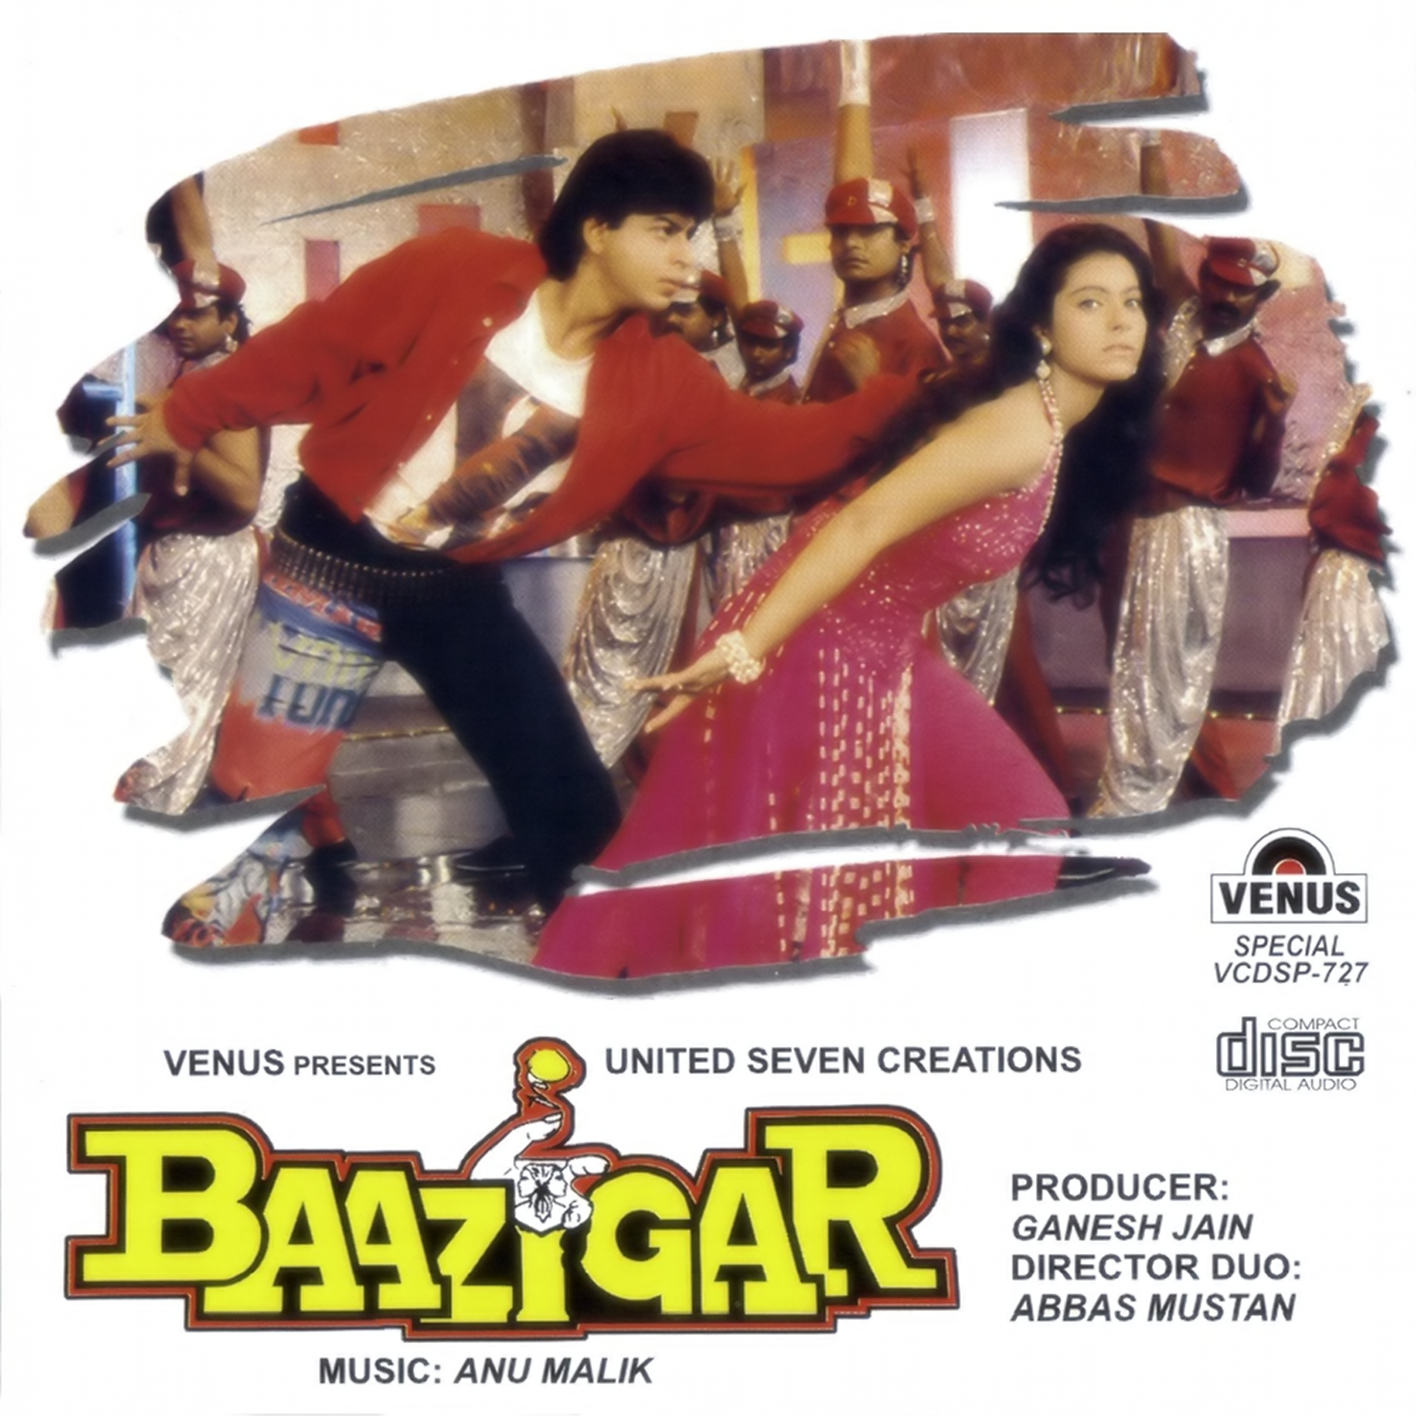 Release Group Baazigar By Anu Malik Musicbrainz Baazigar is a 1993 film directed by abbas — mustan. musicbrainz